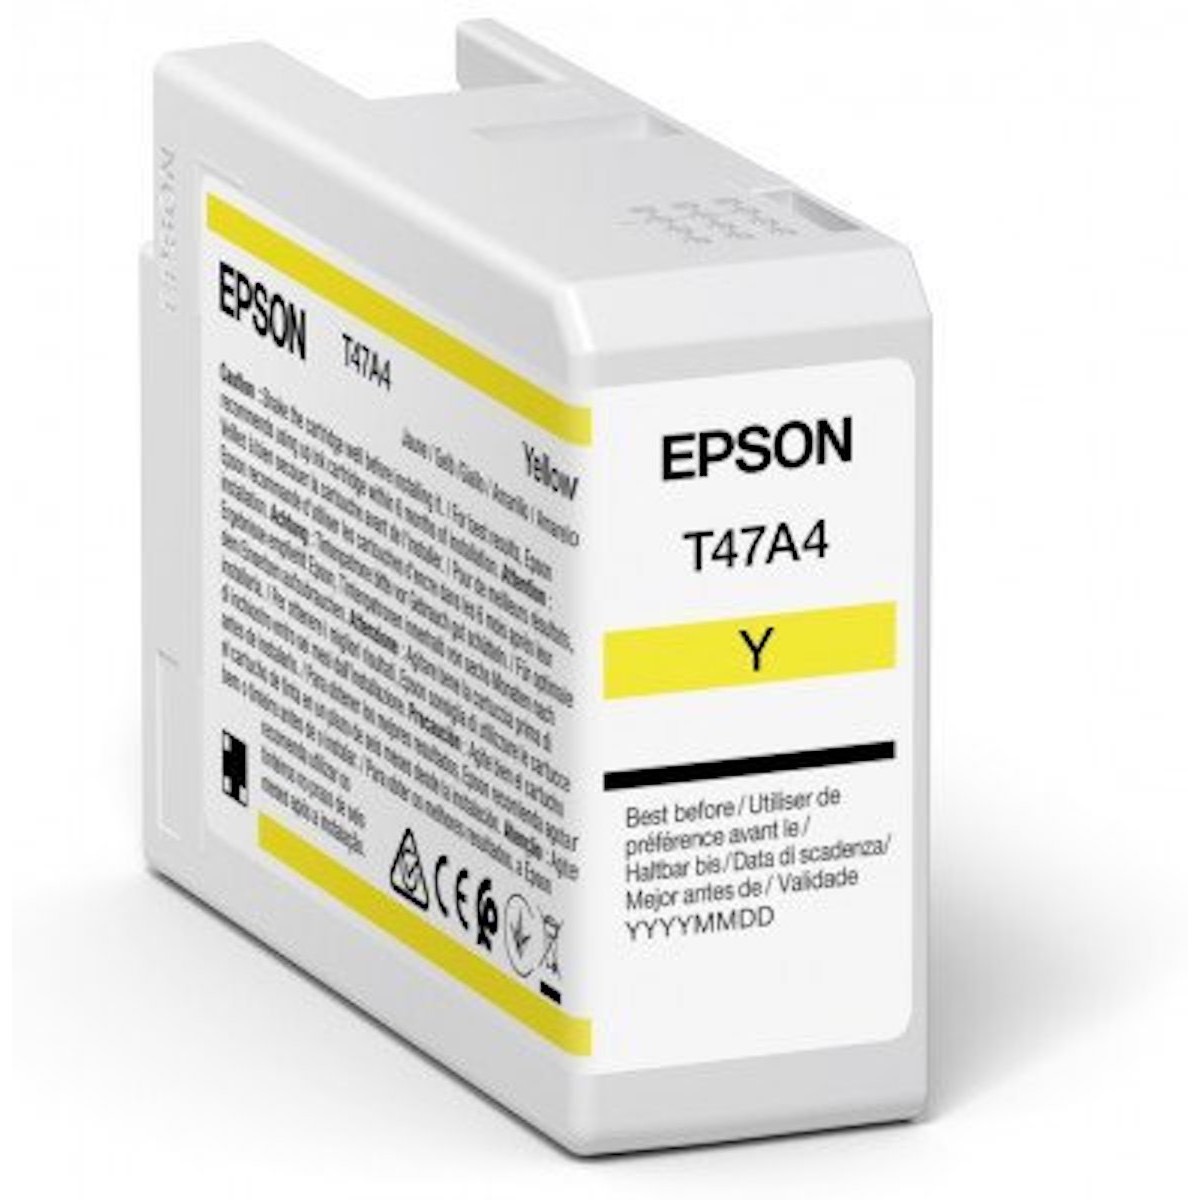 Epson T47A4 yellow Tinte